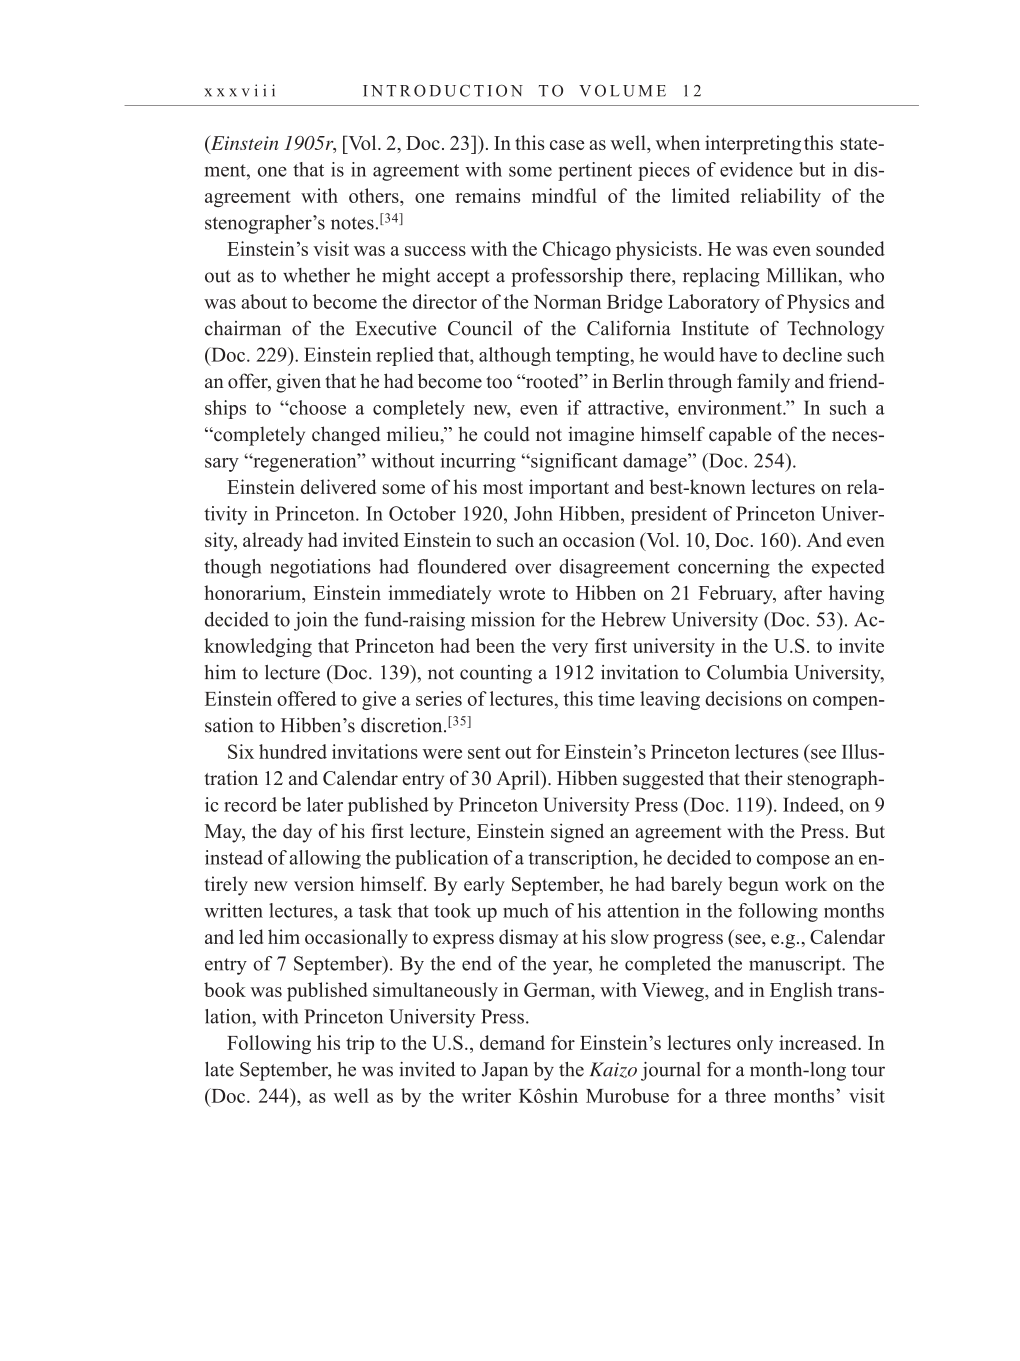 Volume 12: The Berlin Years: Correspondence January-December 1921 page xxxviii